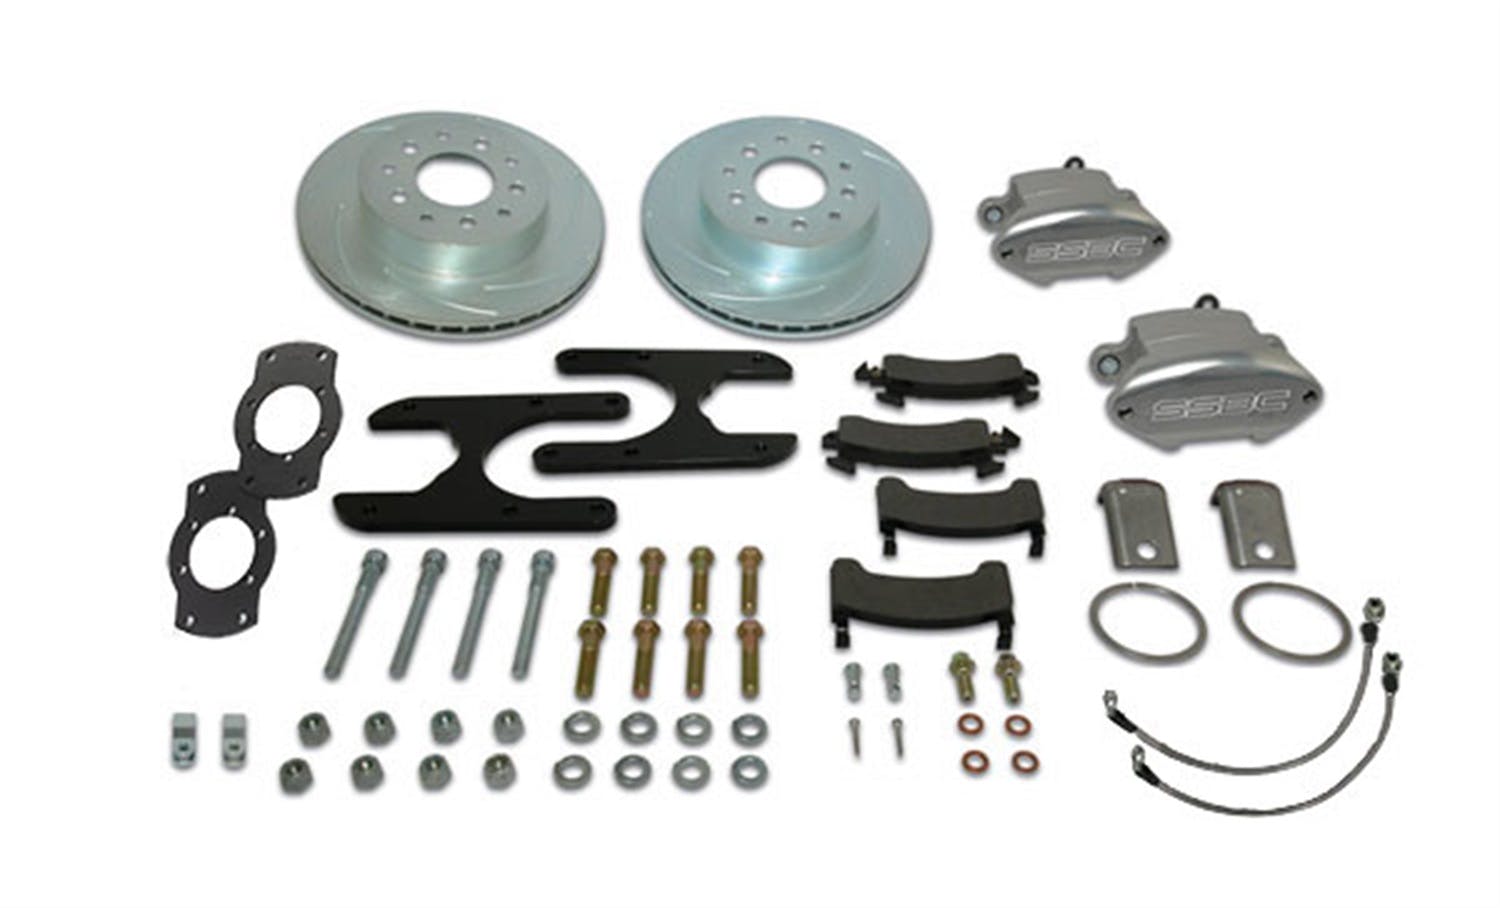 Stainless Steel Brakes A130-5 Sport R1 Rear drm/dsc 76-86 CJ AMC 20 1-pc axle